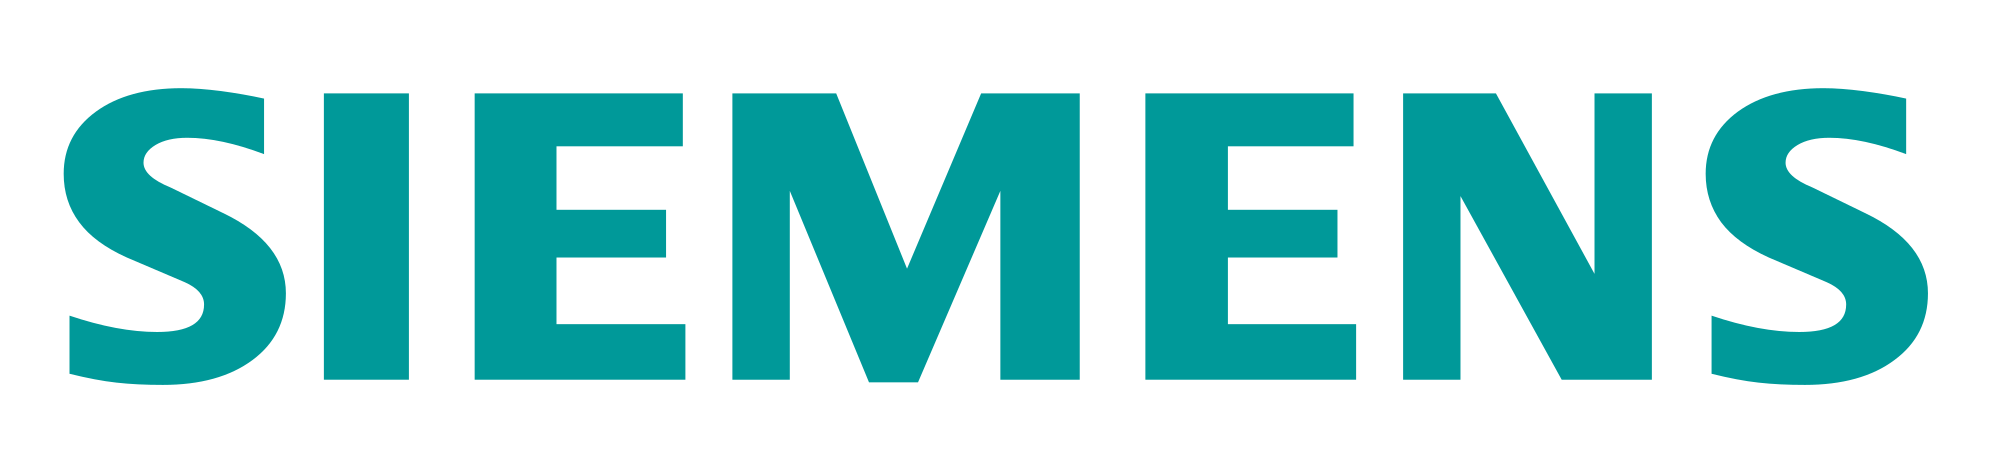 Siemens logo.transparent